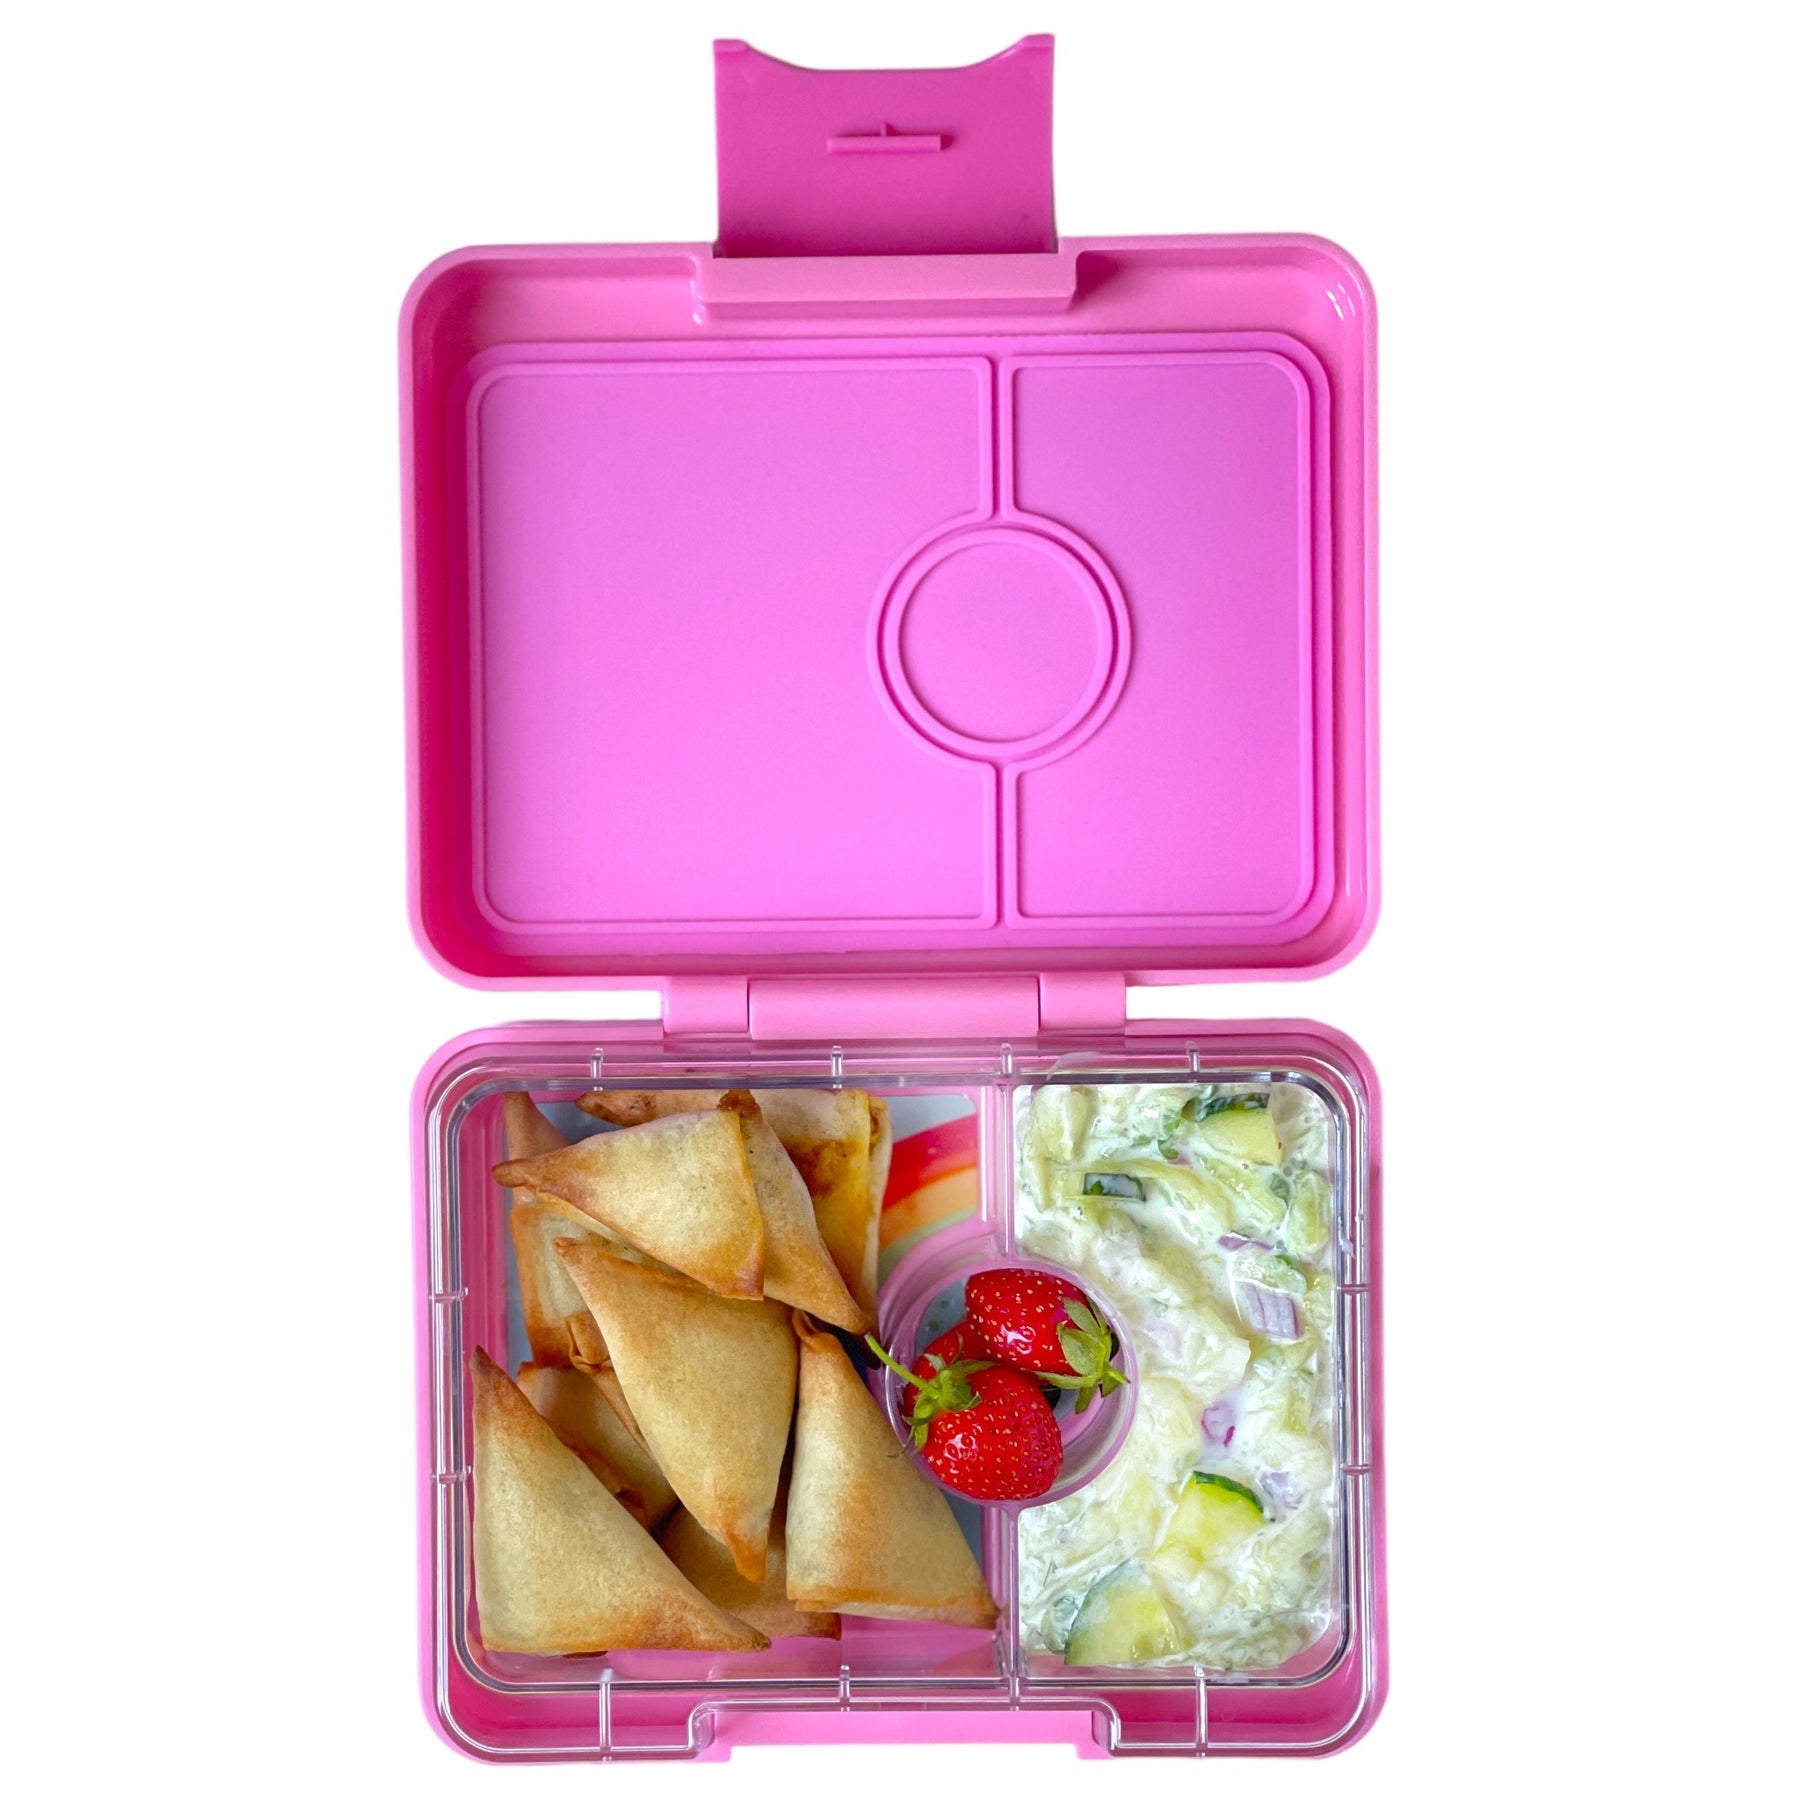 Yumbox Misty Aqua Rainbow Snack Size Bento Box